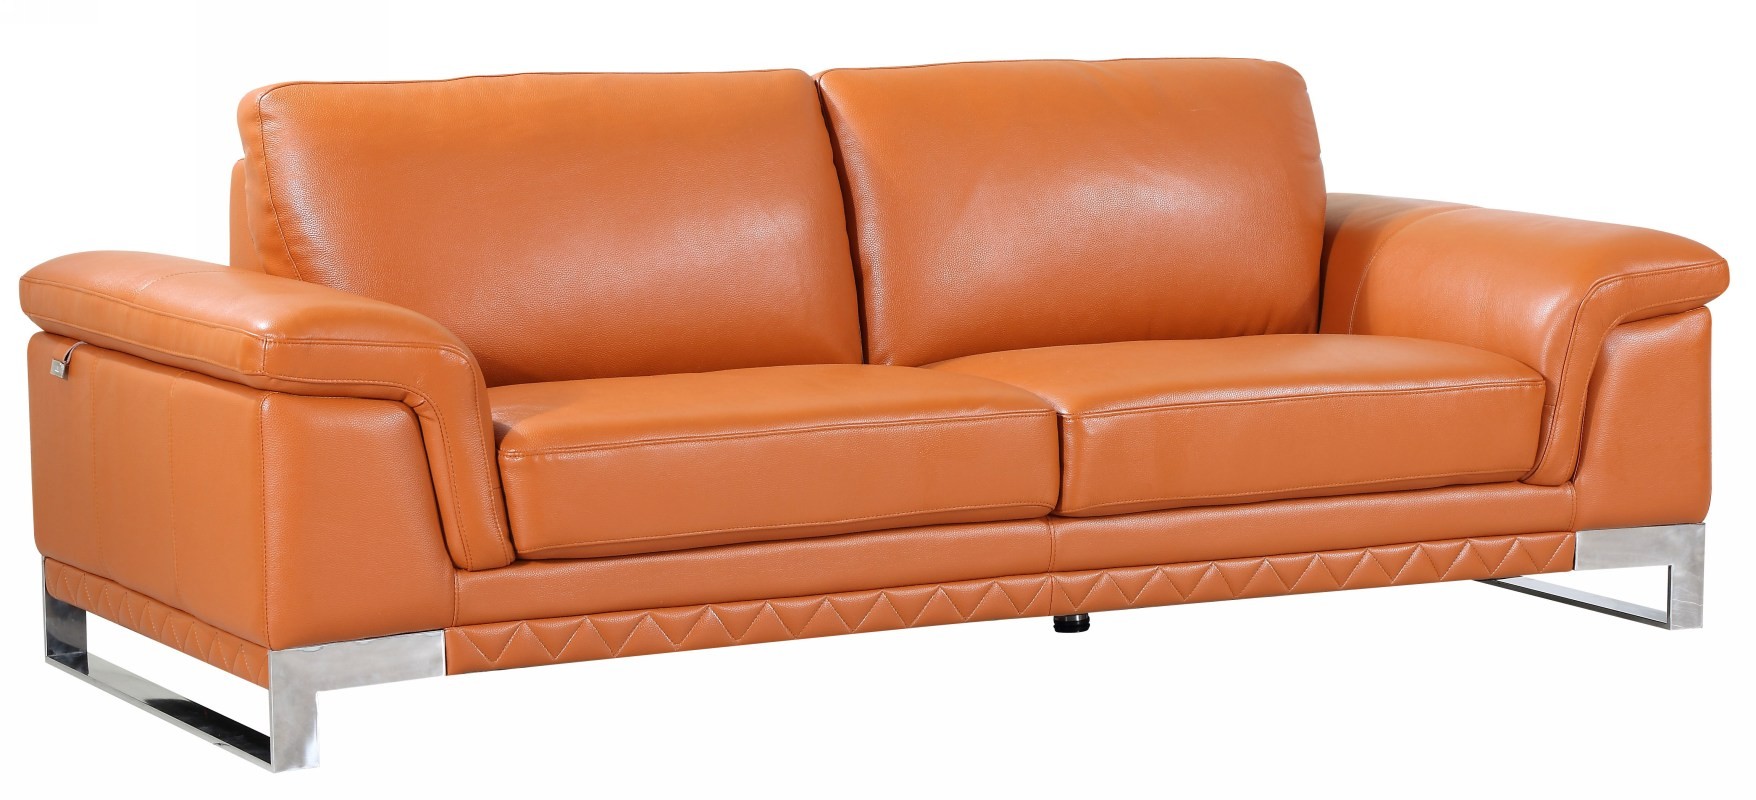 butterscoth color leather sofa sets